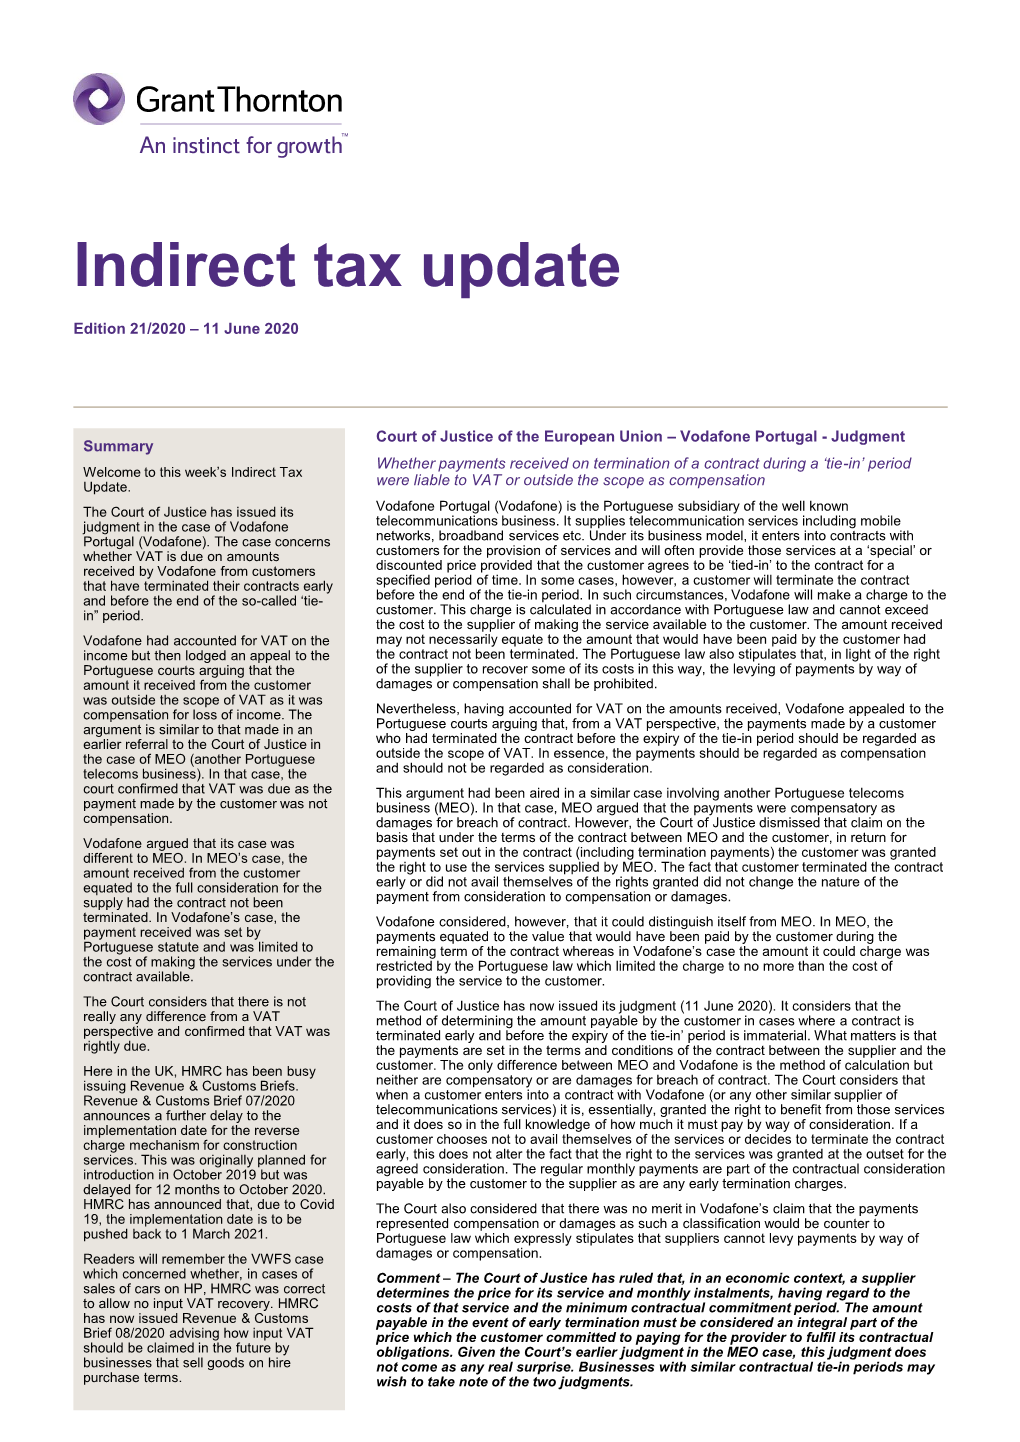 Indirect Tax Update